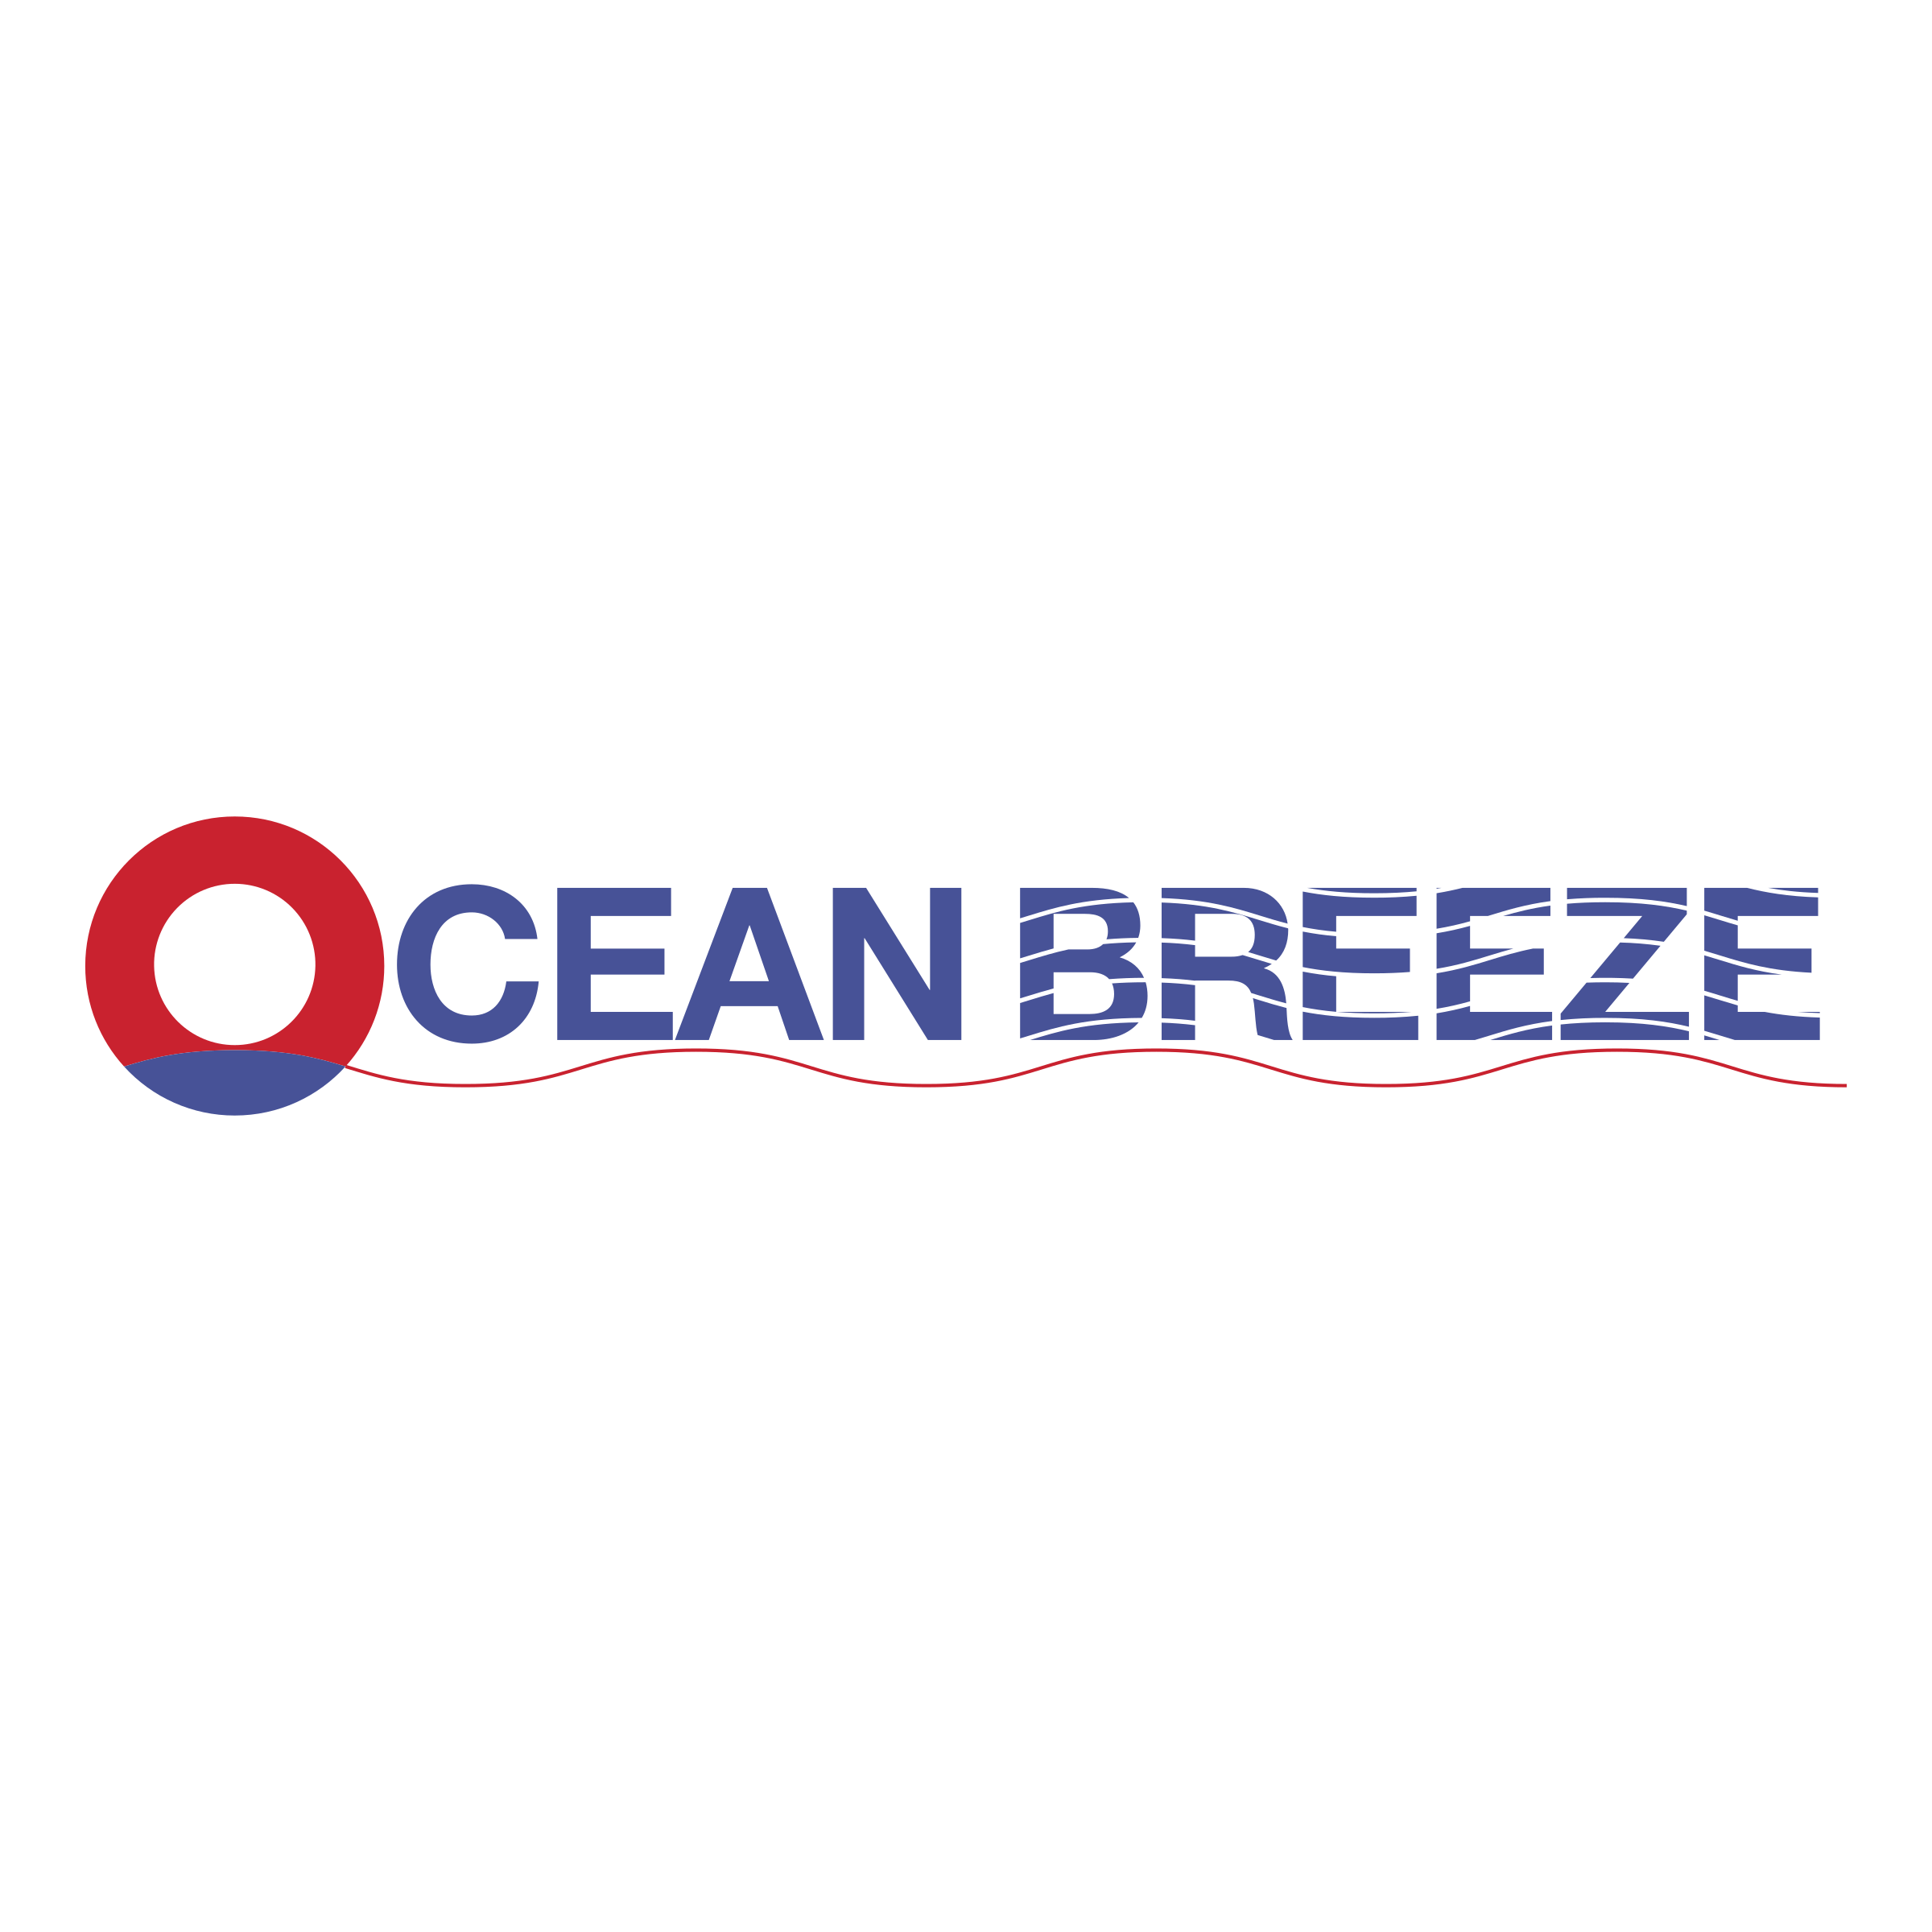 Breeze Logo - Ocean Breeze Logo PNG Transparent & SVG Vector - Freebie Supply